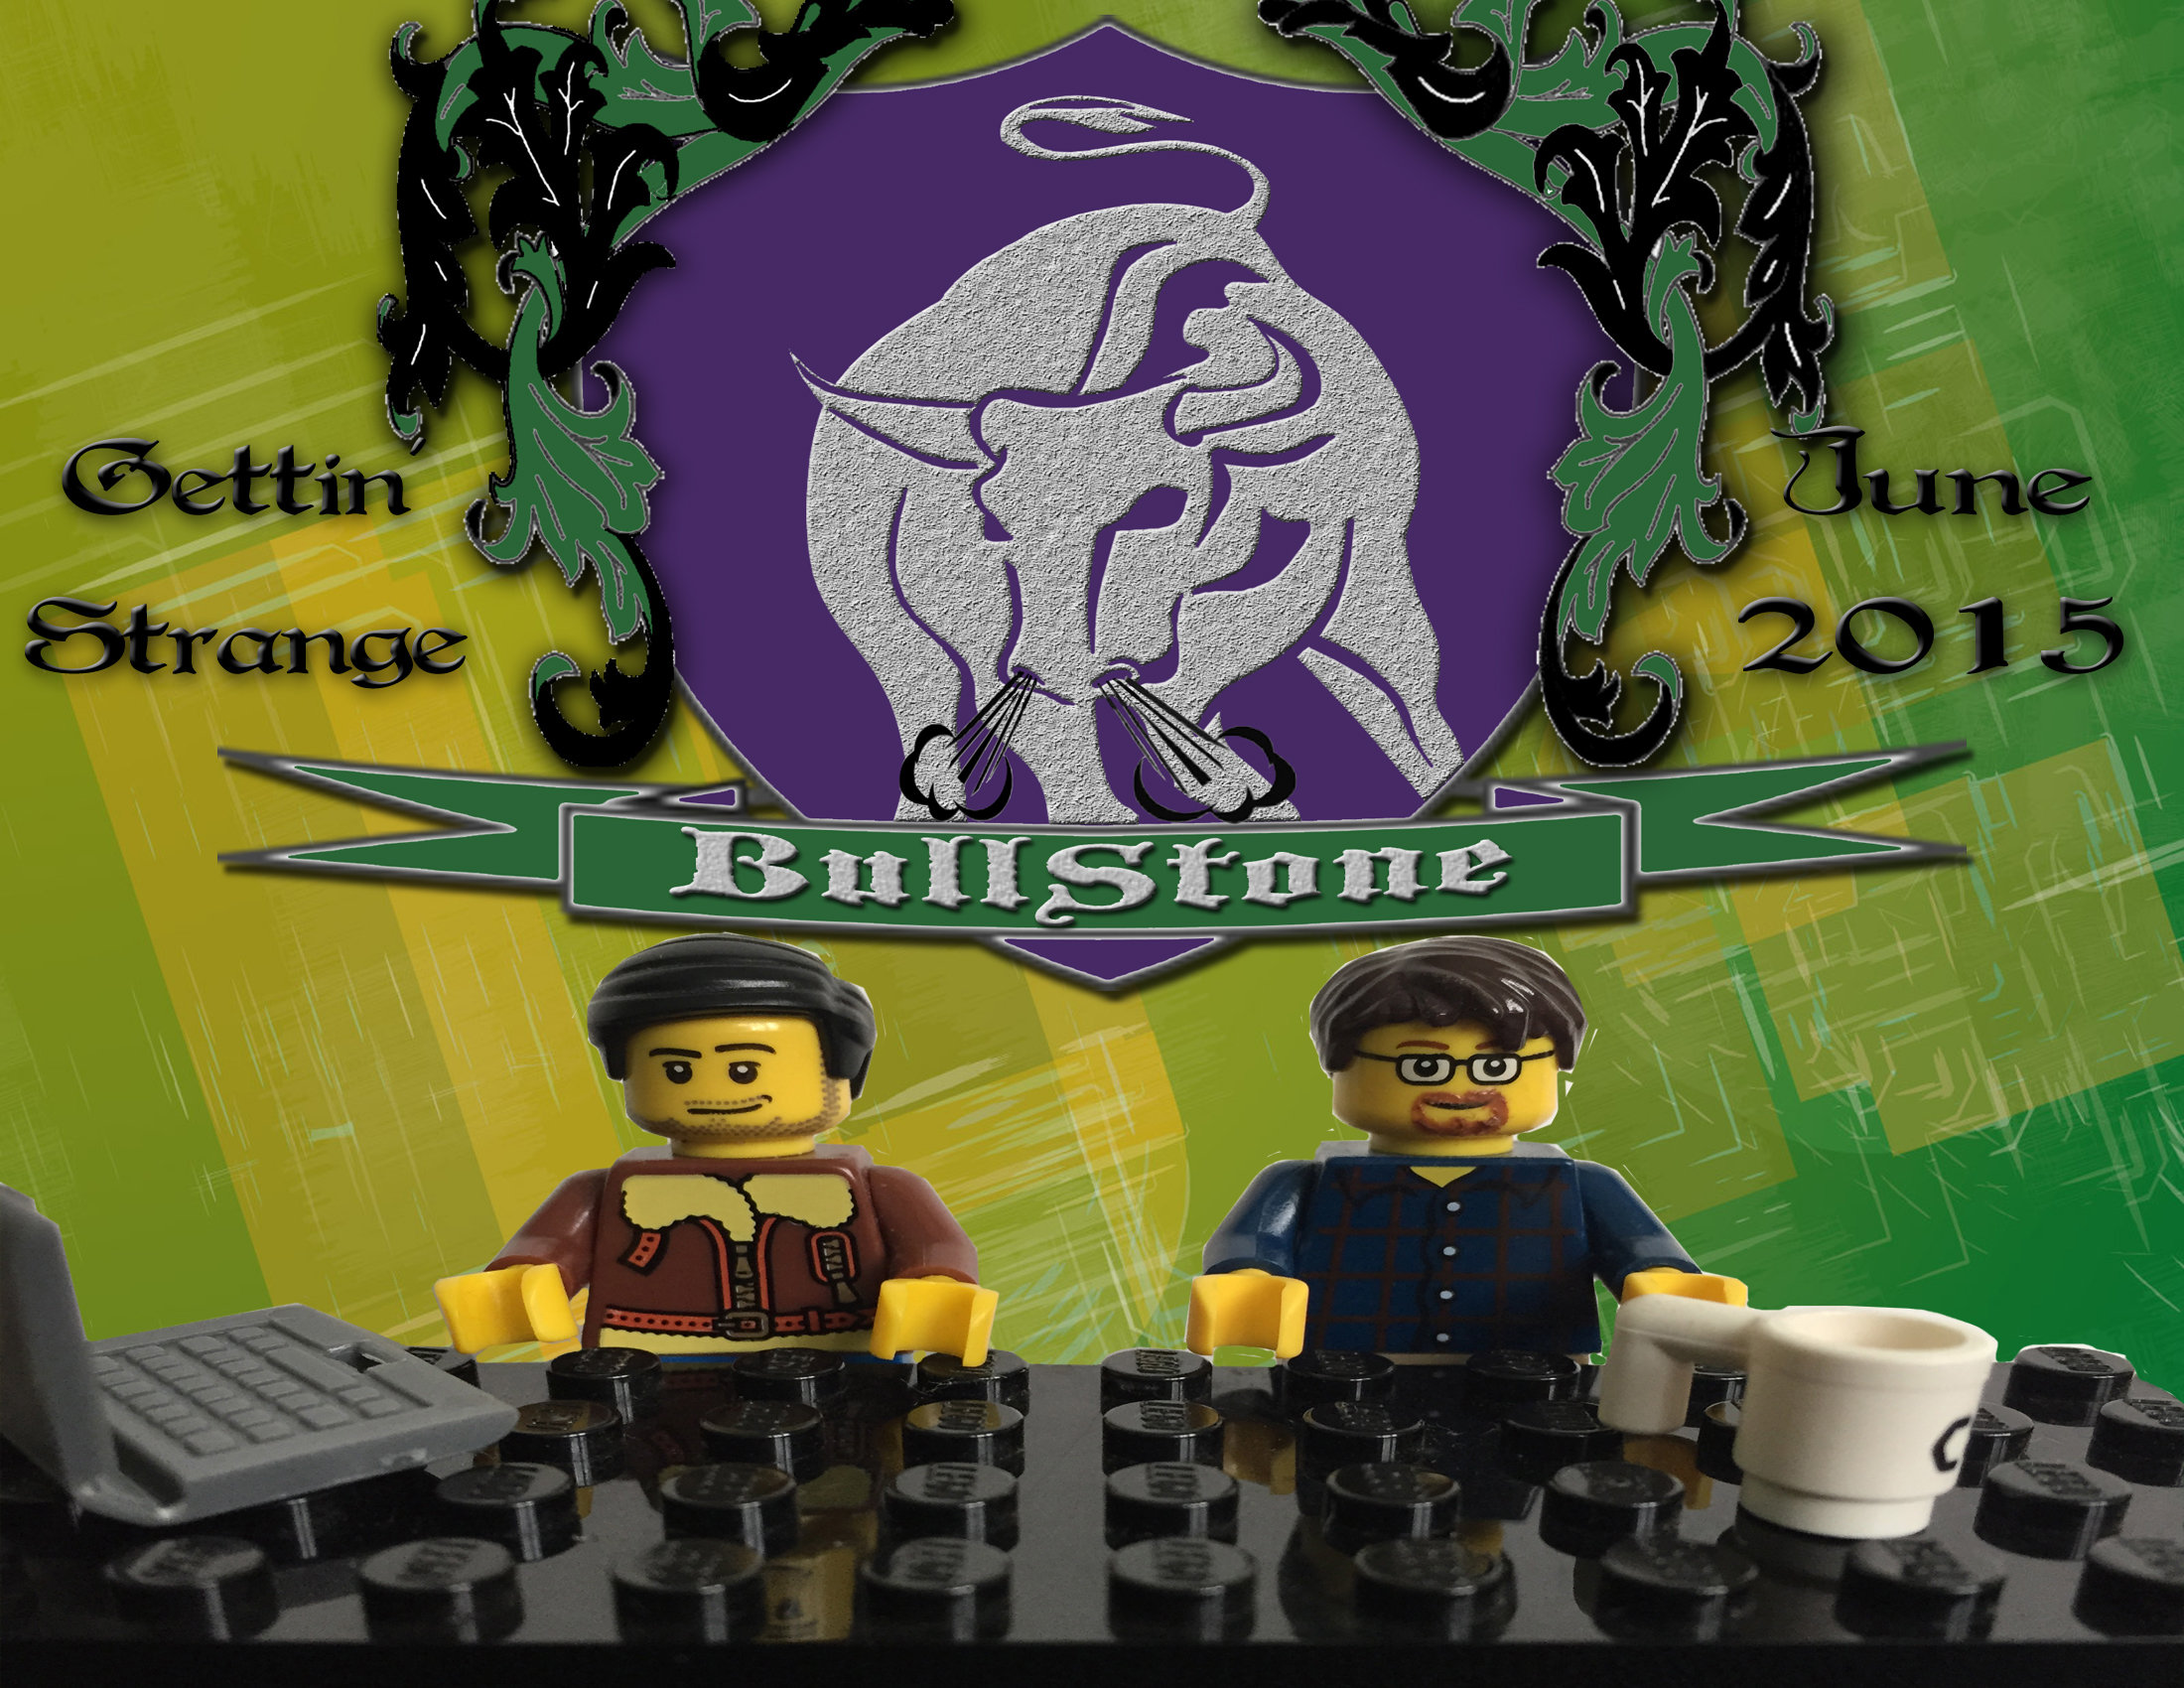 BullStone 6: Gettin' Strange June 2015